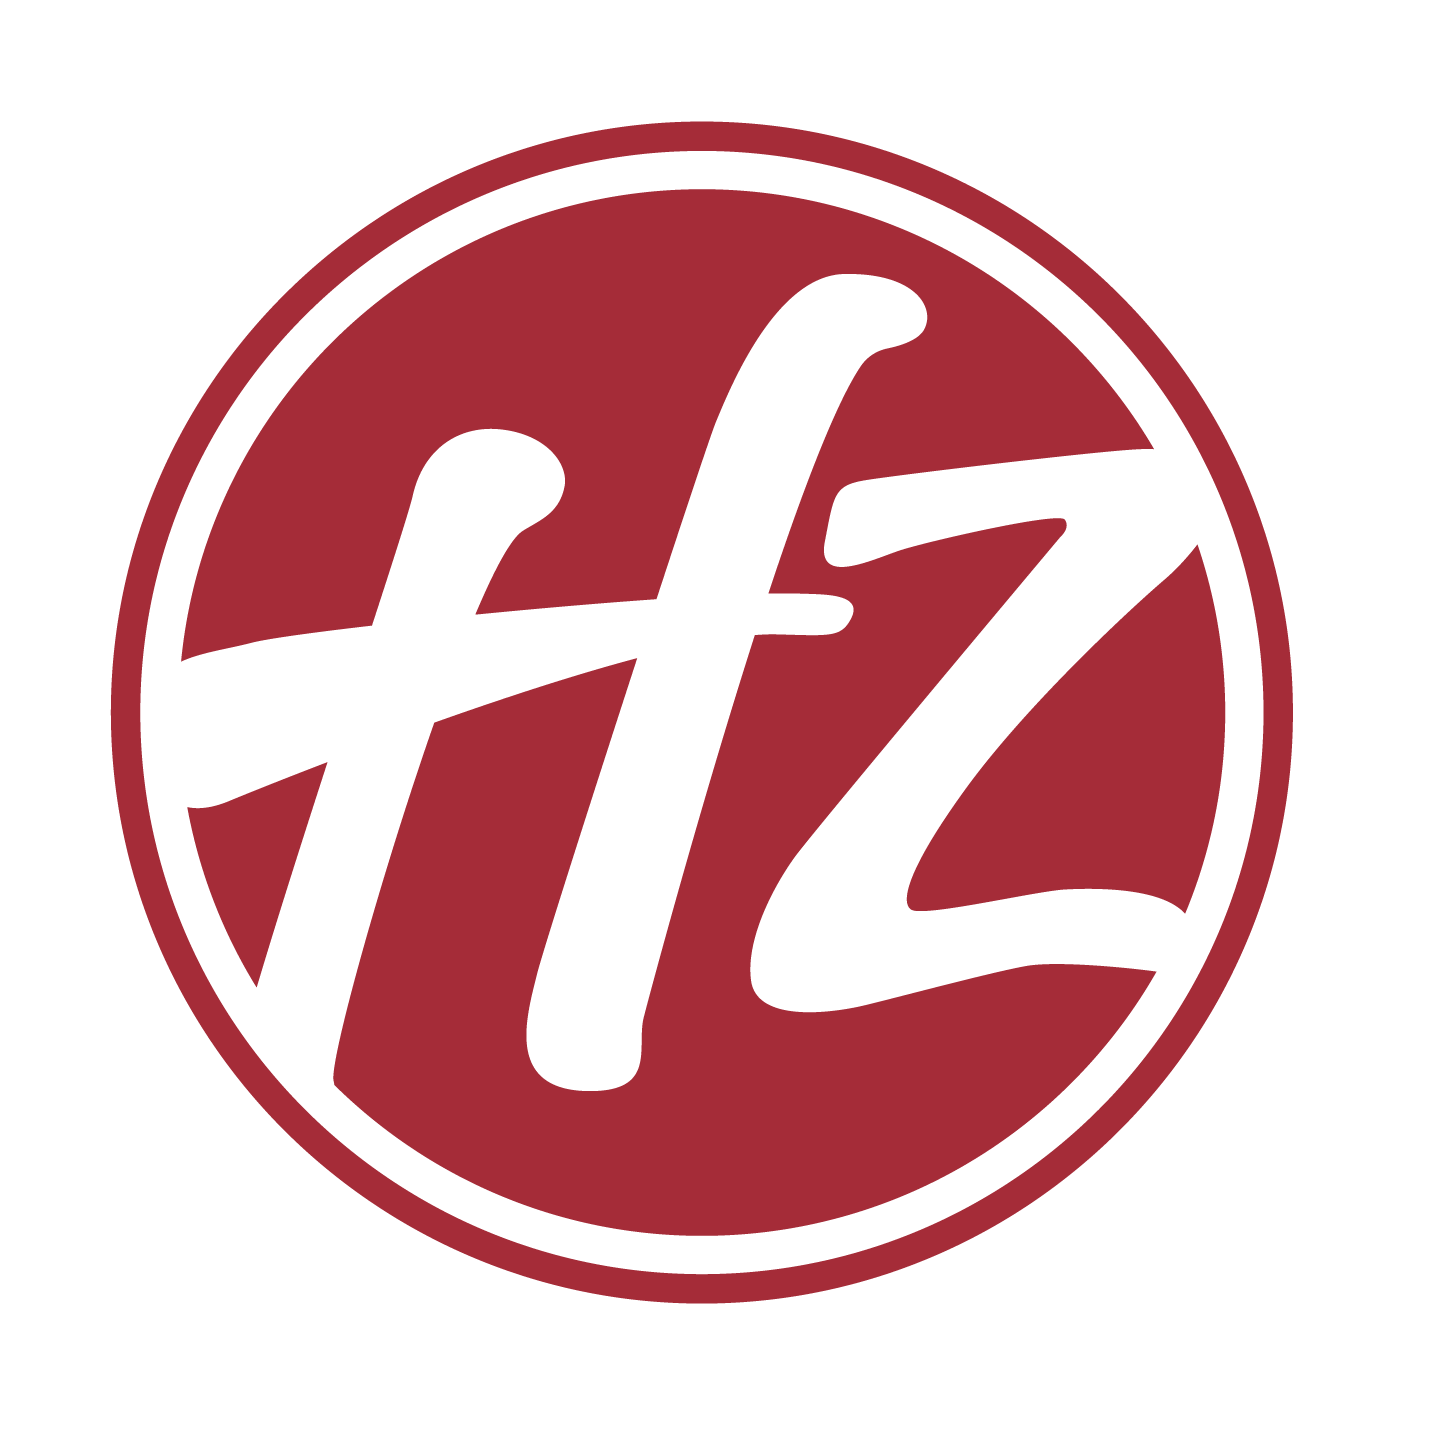 Company logo of Home Zone Furniture